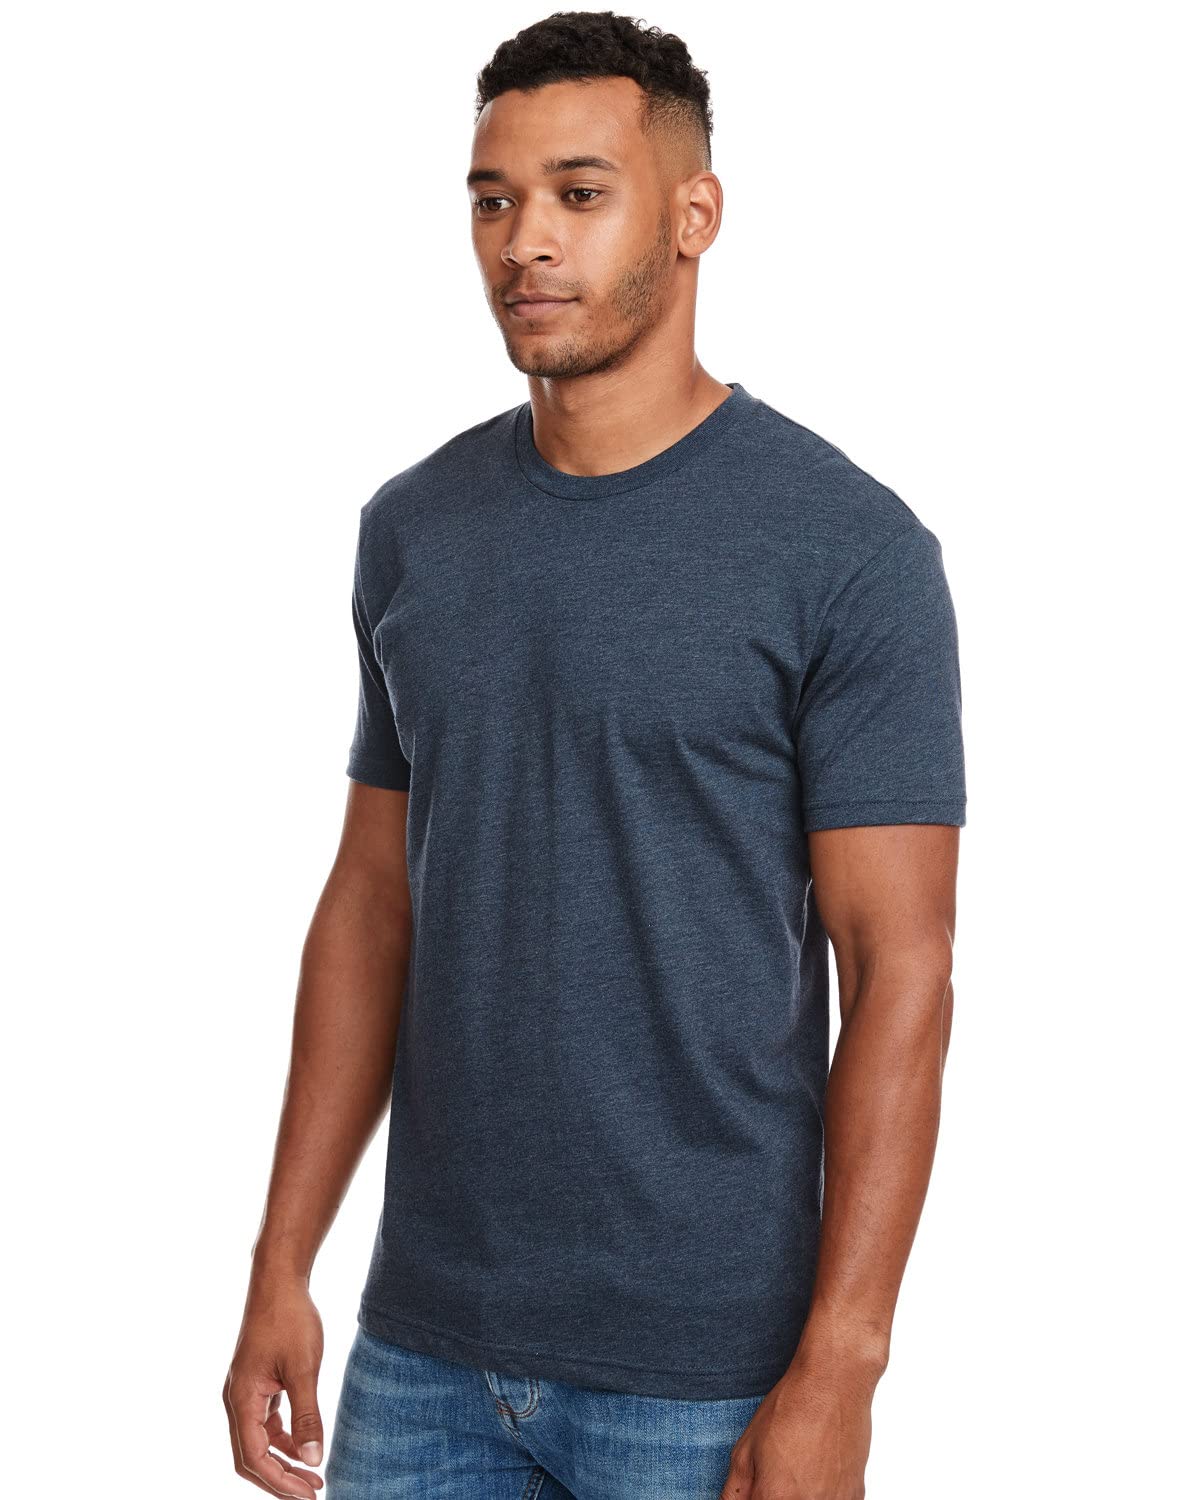 Next Level Apparel Mens Premium Fitted Cvc T-Shirt (6210), Indigo, X-Small